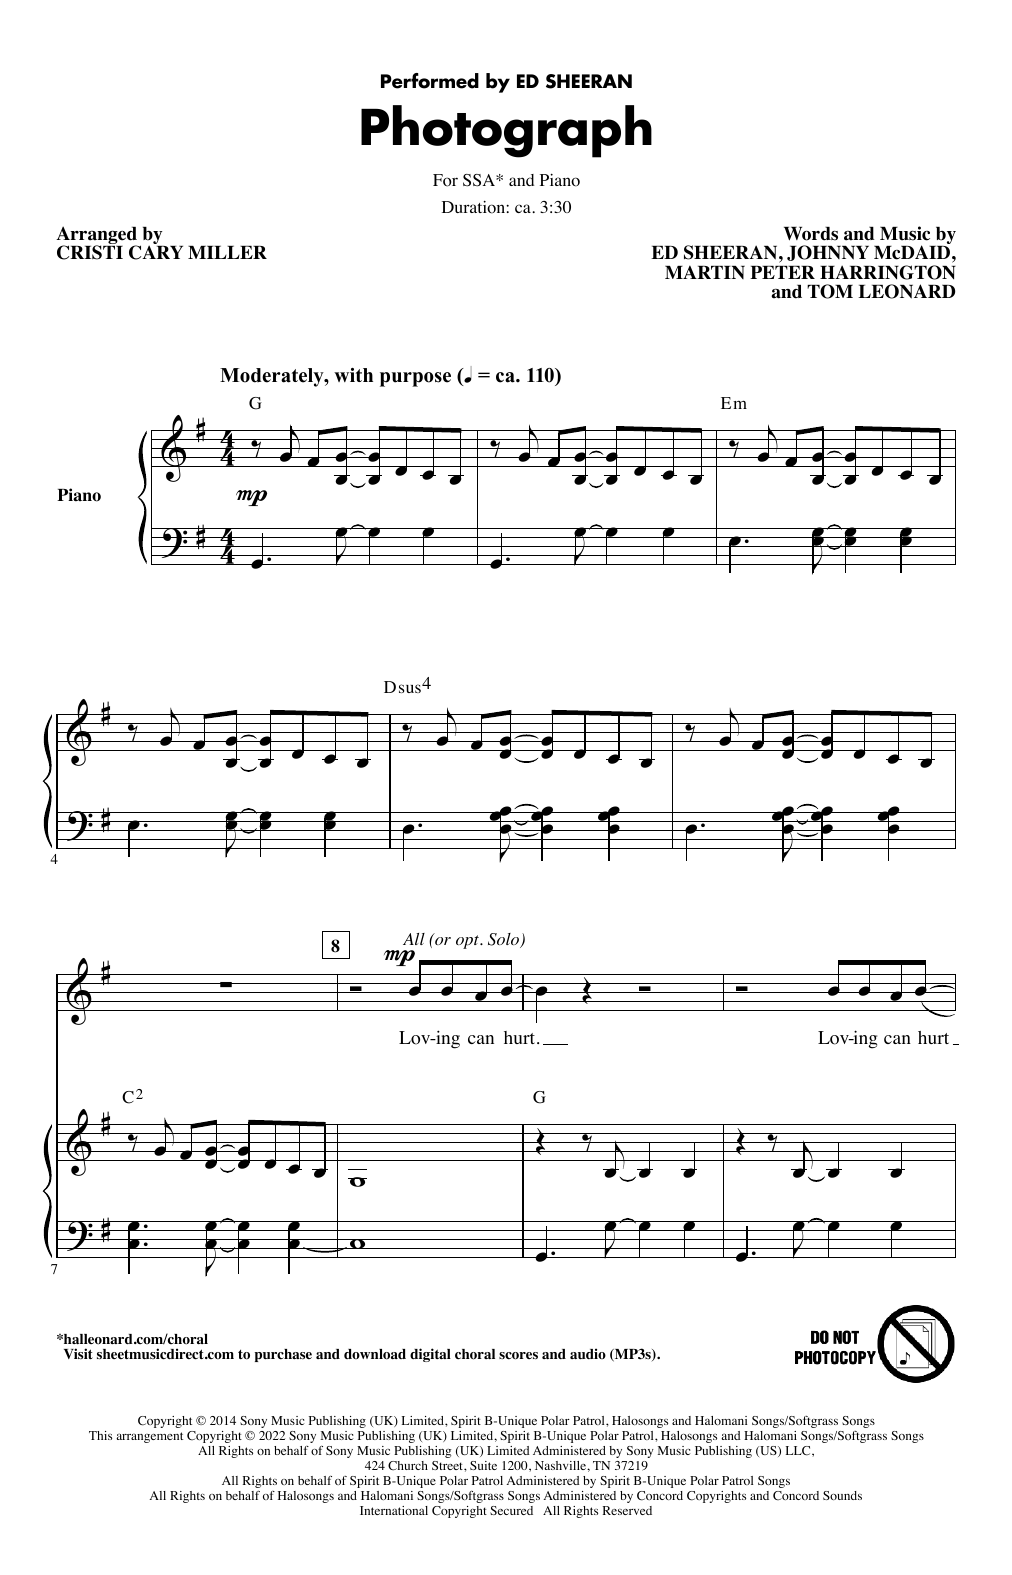 Ed Sheeran Photograph (arr. Cristi Cary Miller) Sheet Music Notes & Chords for SSA Choir - Download or Print PDF